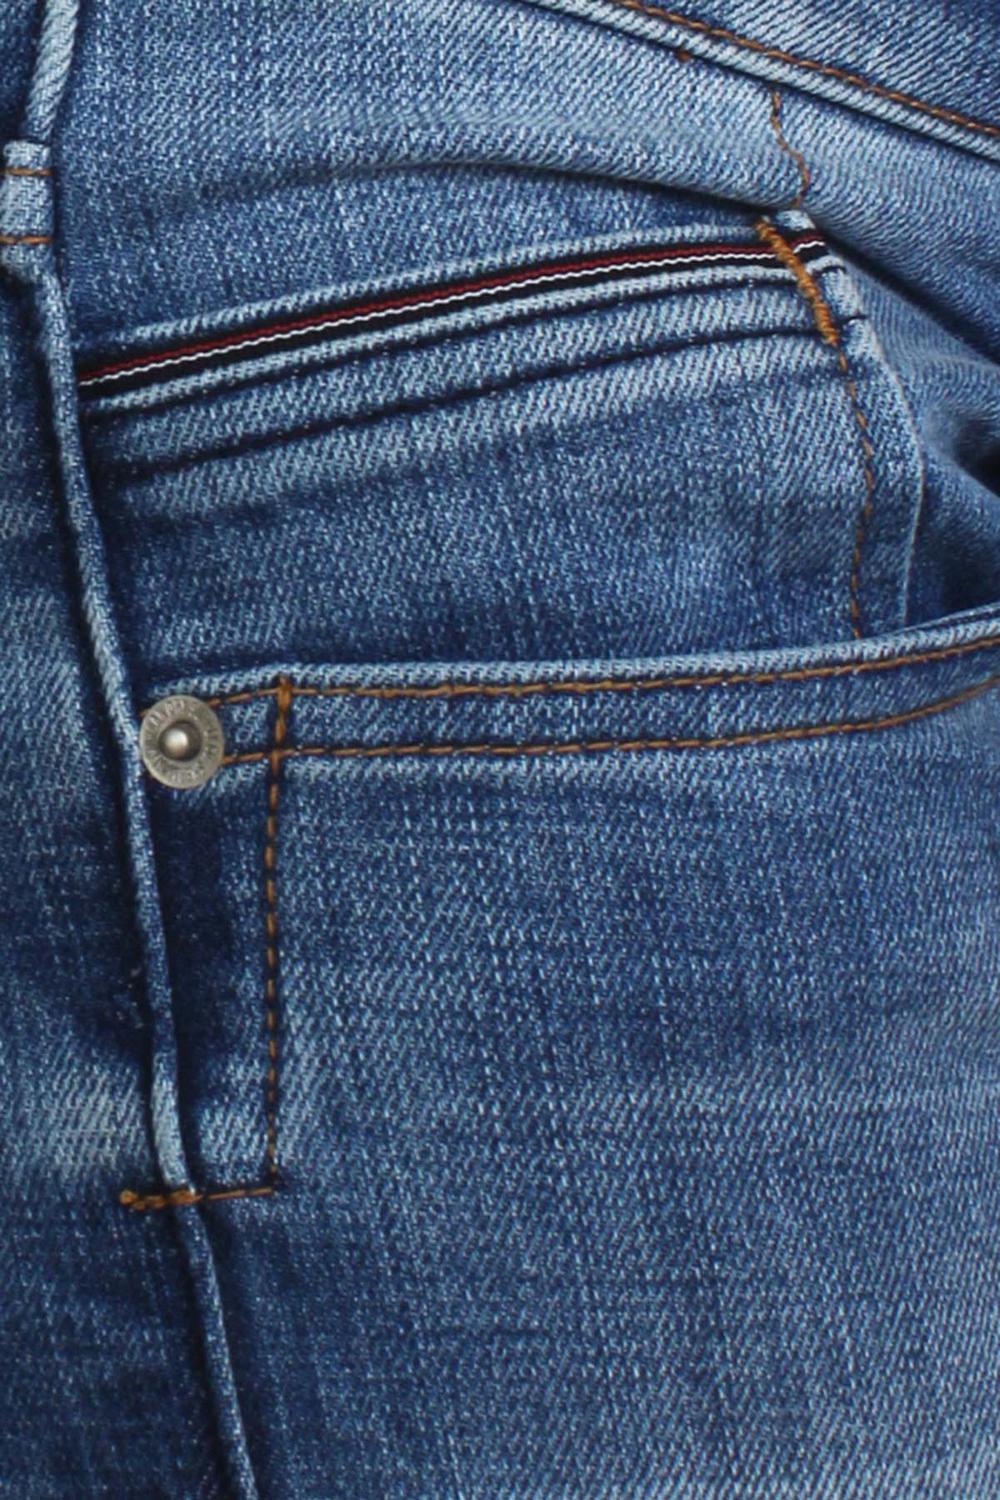 Jeans skinny comfort fit 025008000013